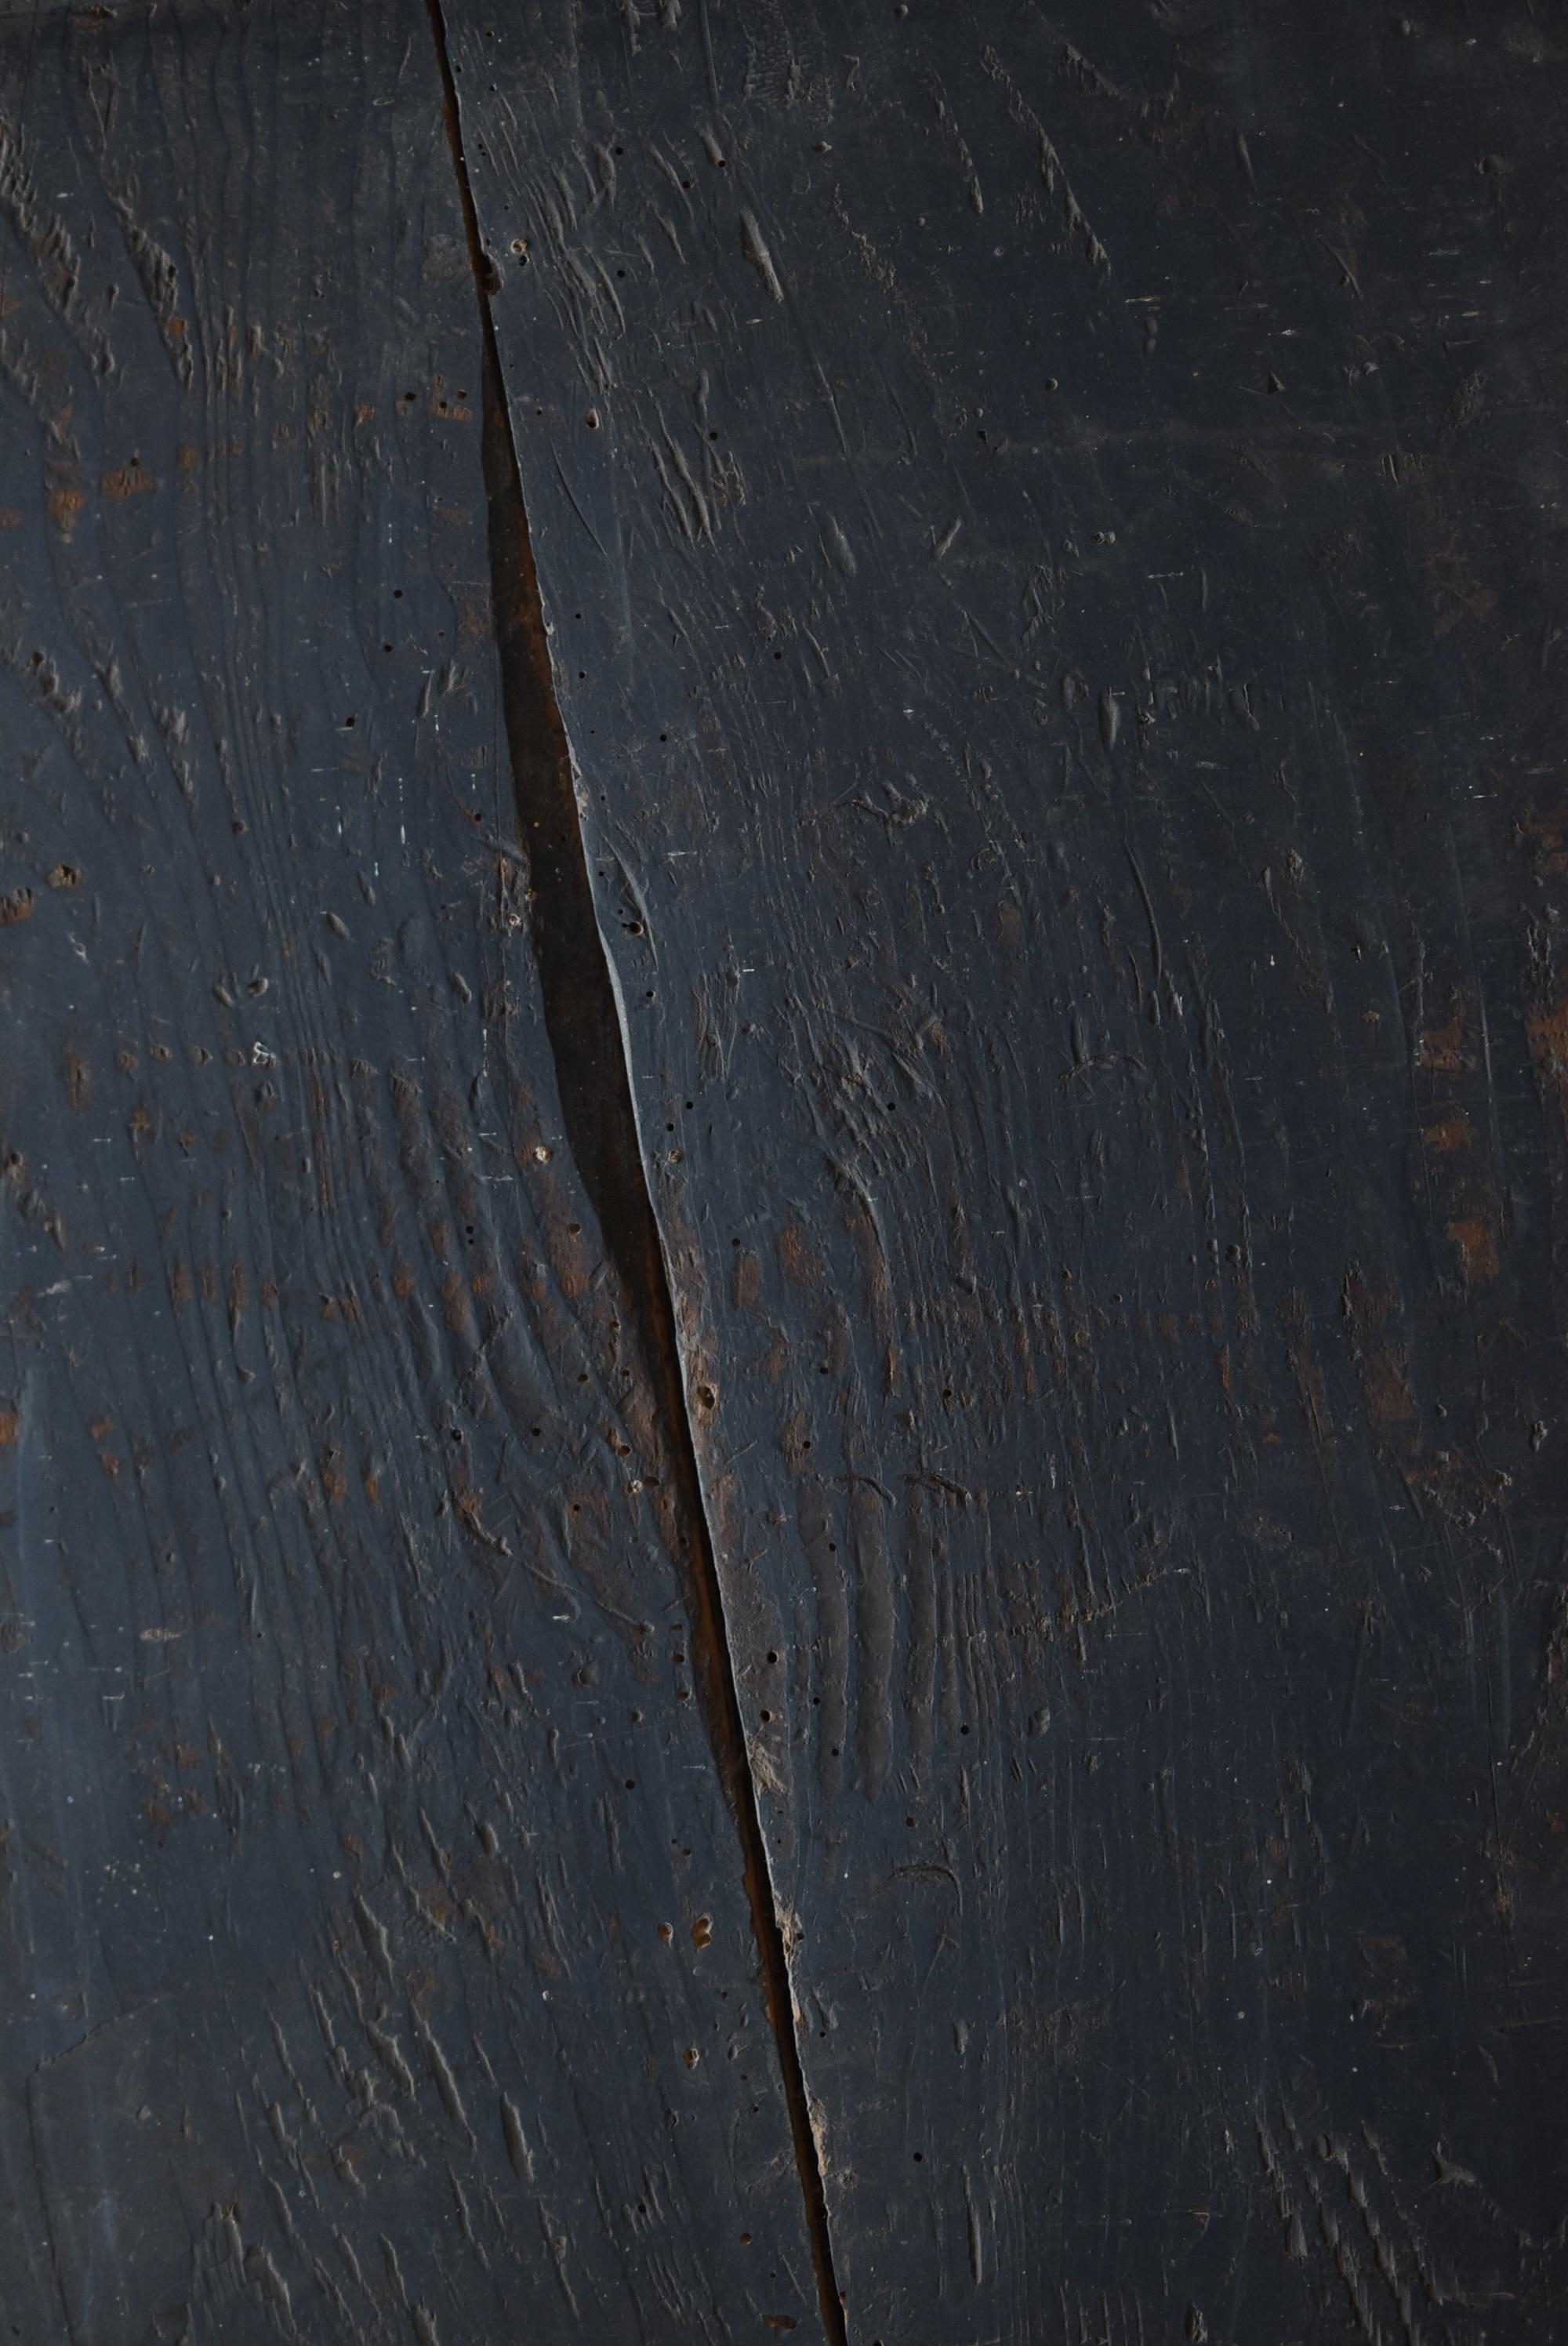 Japanese Antique Black Wooden Board 1800s-1900s/Abstract Art Wabisabi Art 4